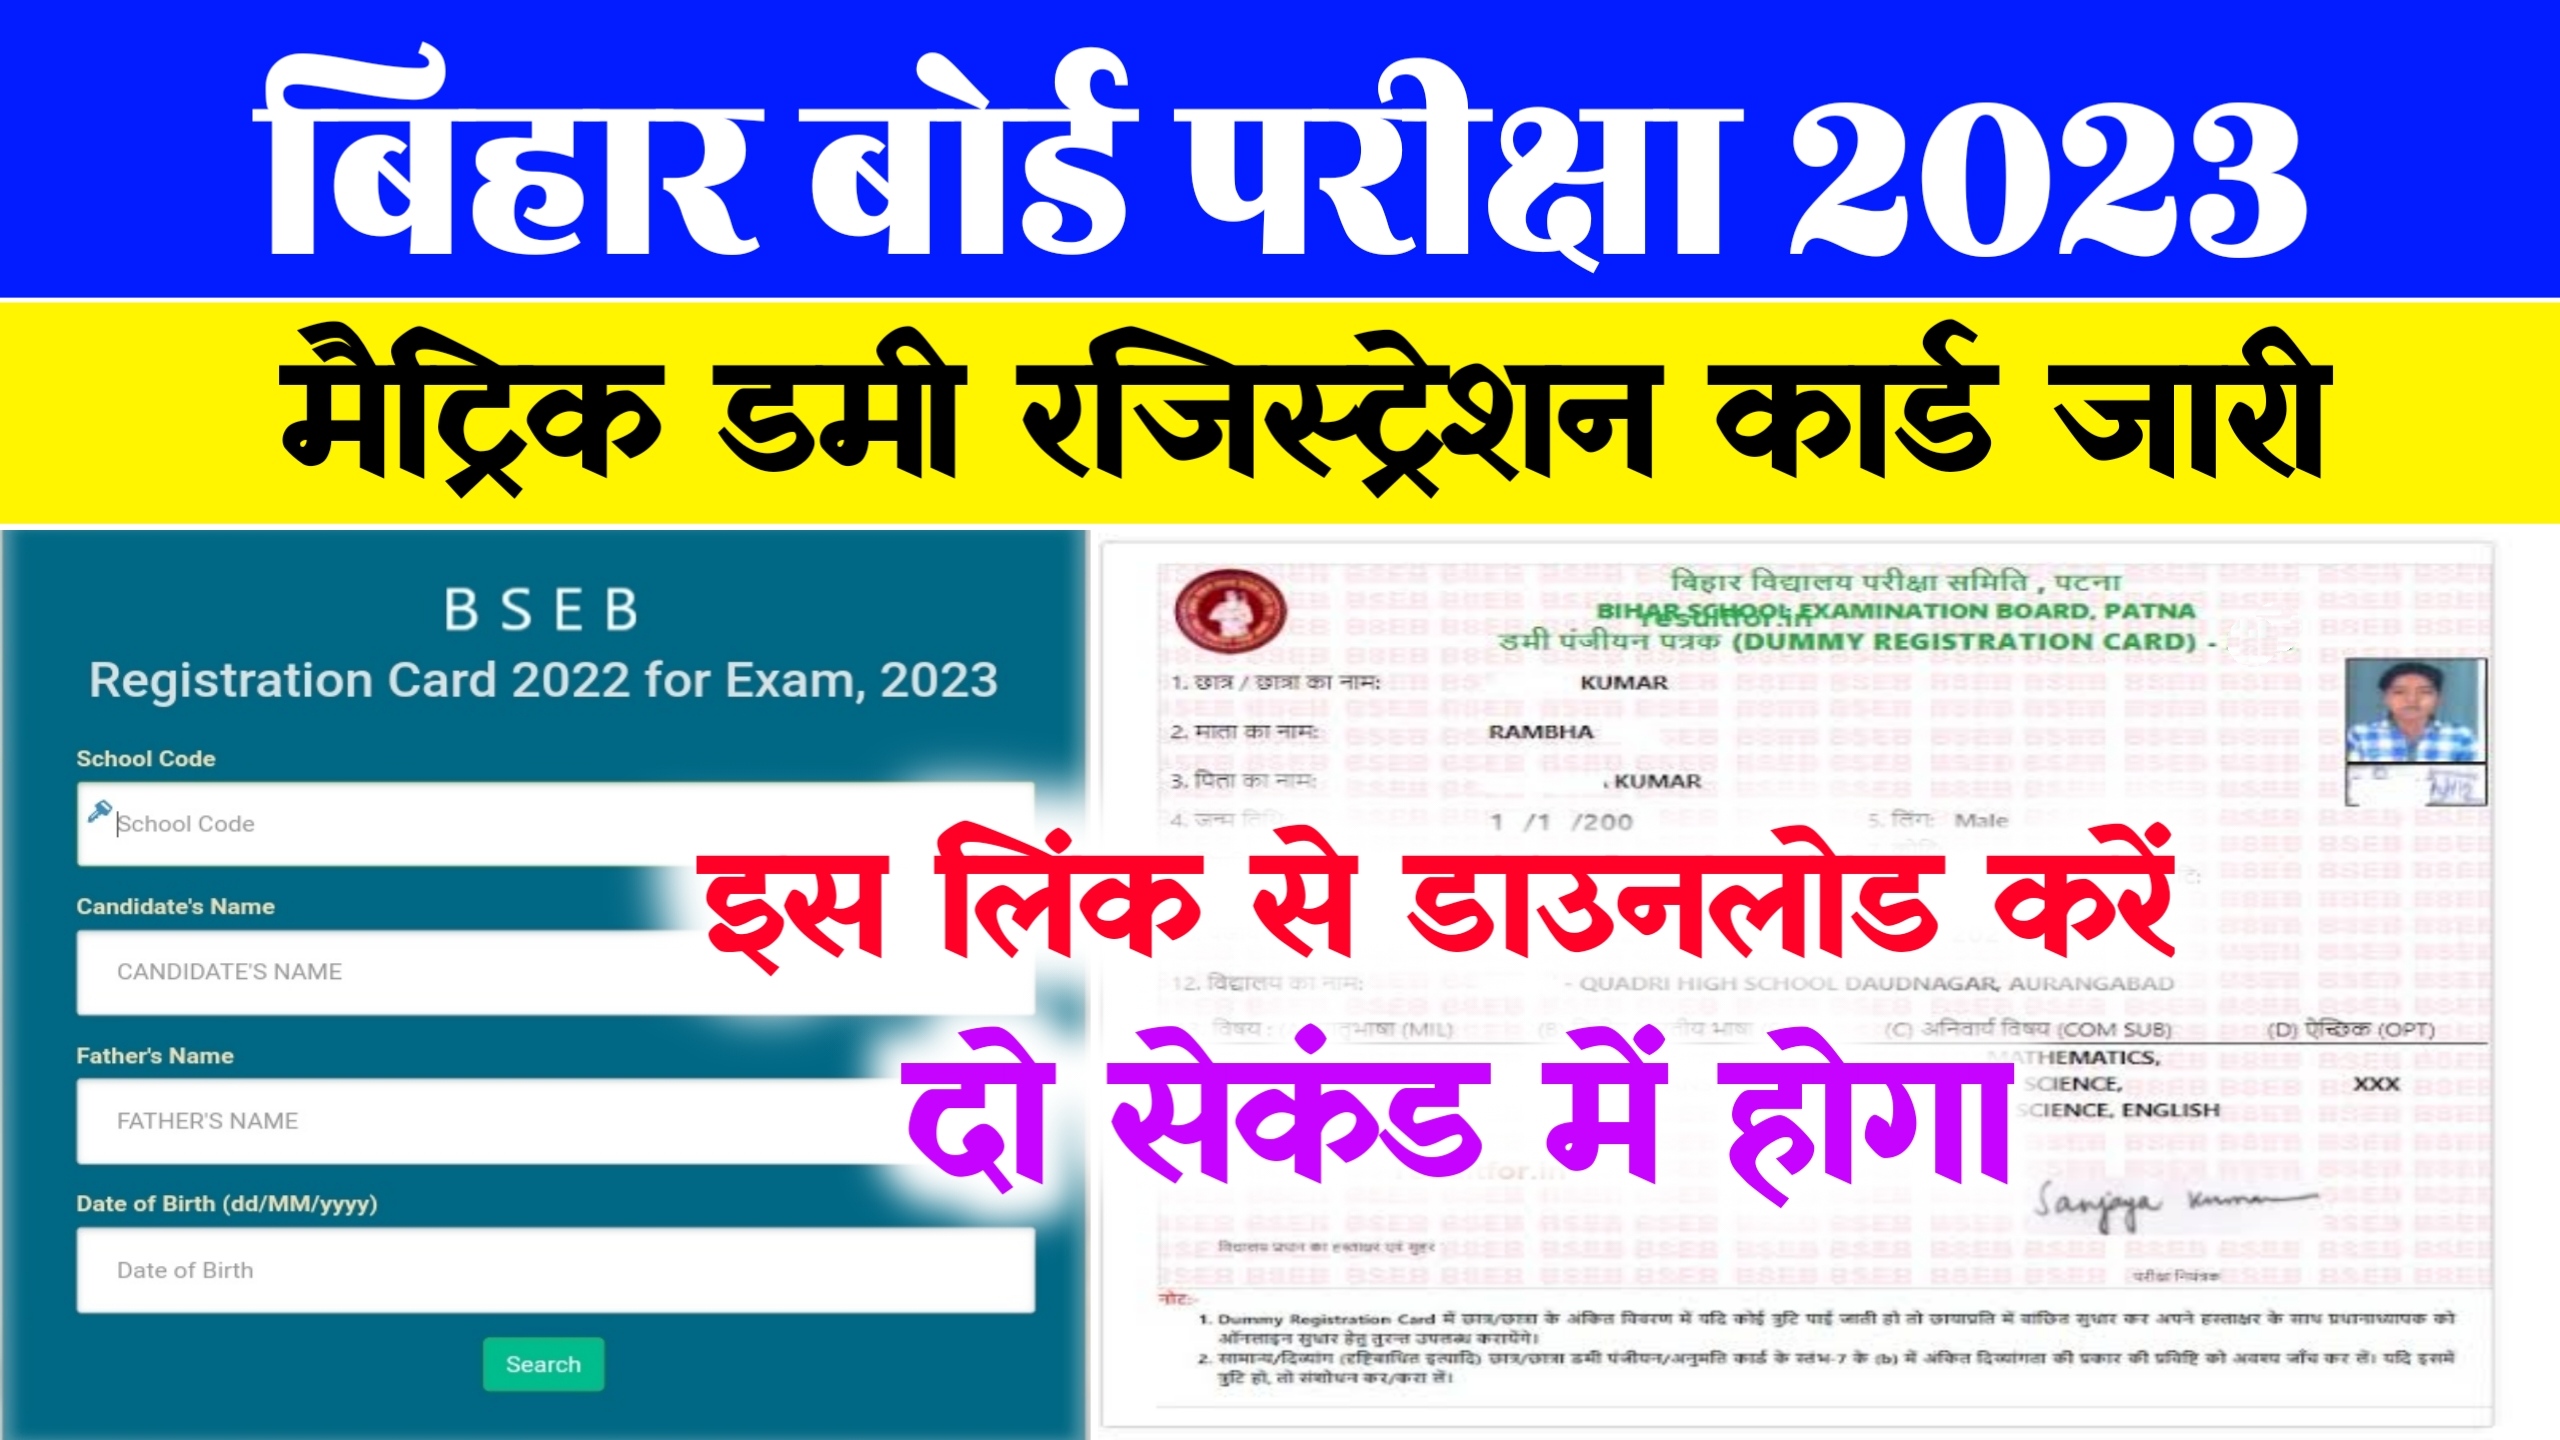 biharboardonline.com Bihar Board 10th Dummy Registration Card 2023 Link